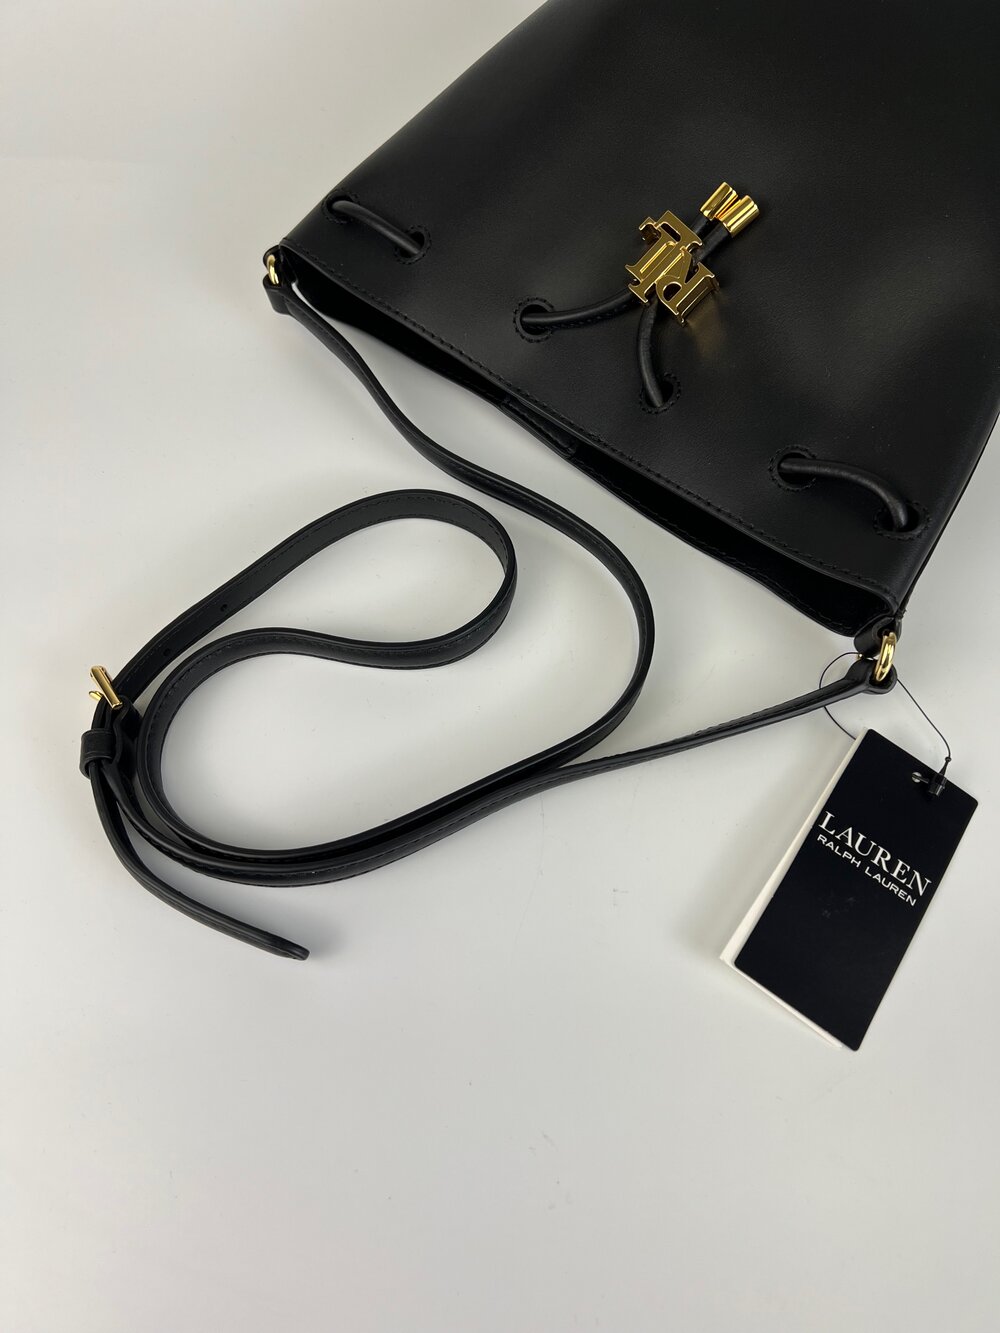 DKNY Elissa Phone Crossbody Bag, Blue — Fashion Cents Consignment & Thrift  Stores in Ephrata, Strasburg, East Earl, Morgantown PA